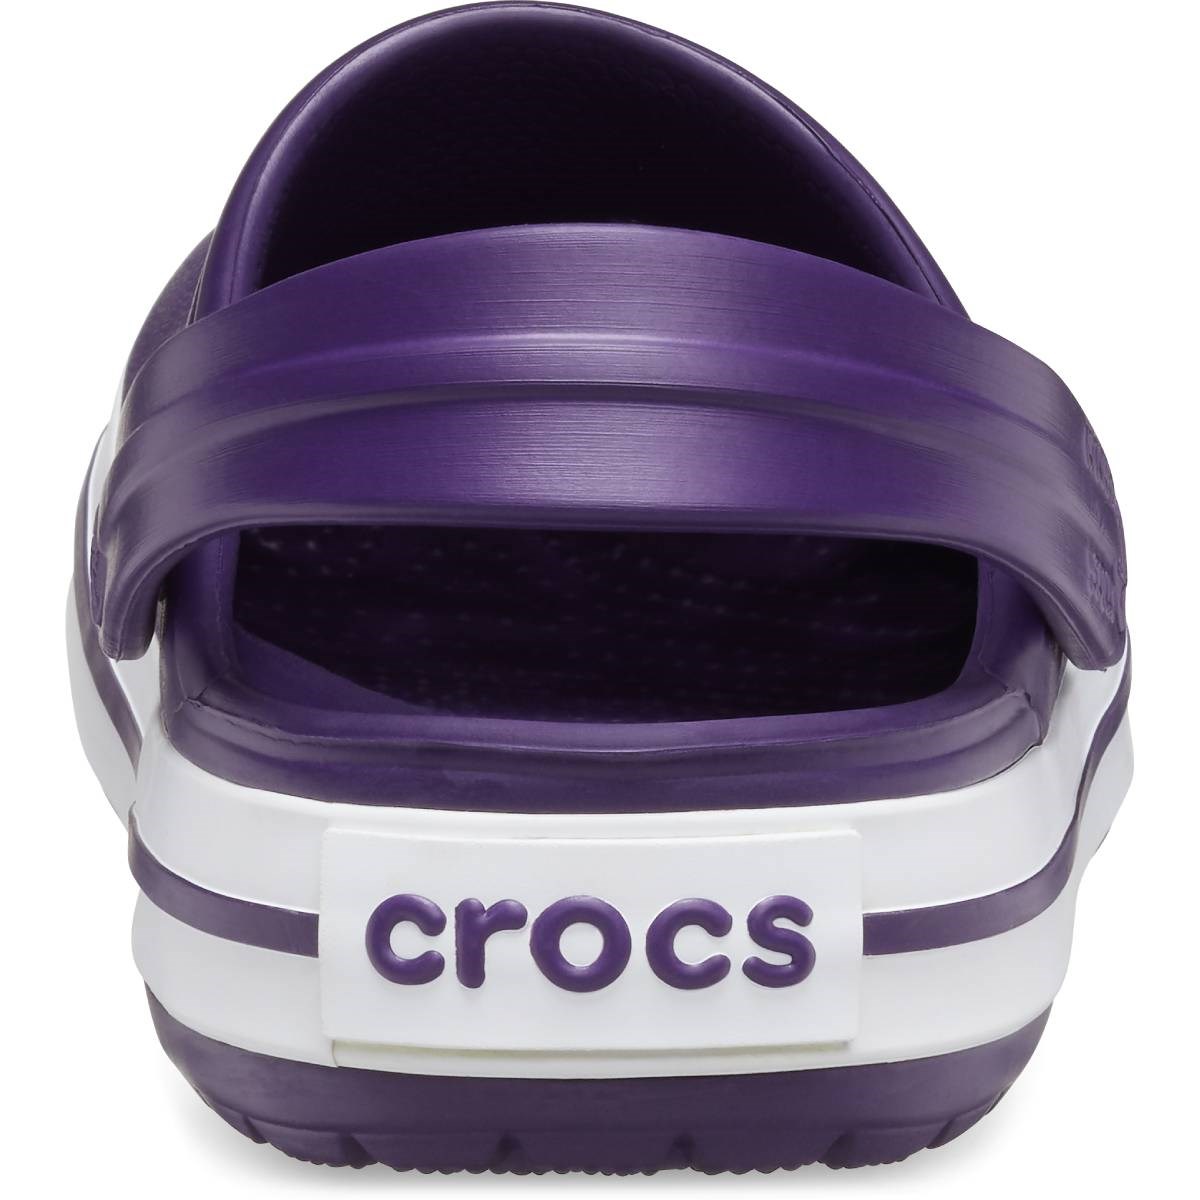 Crocs Unisex Sandalet 11016 Mulberry/White